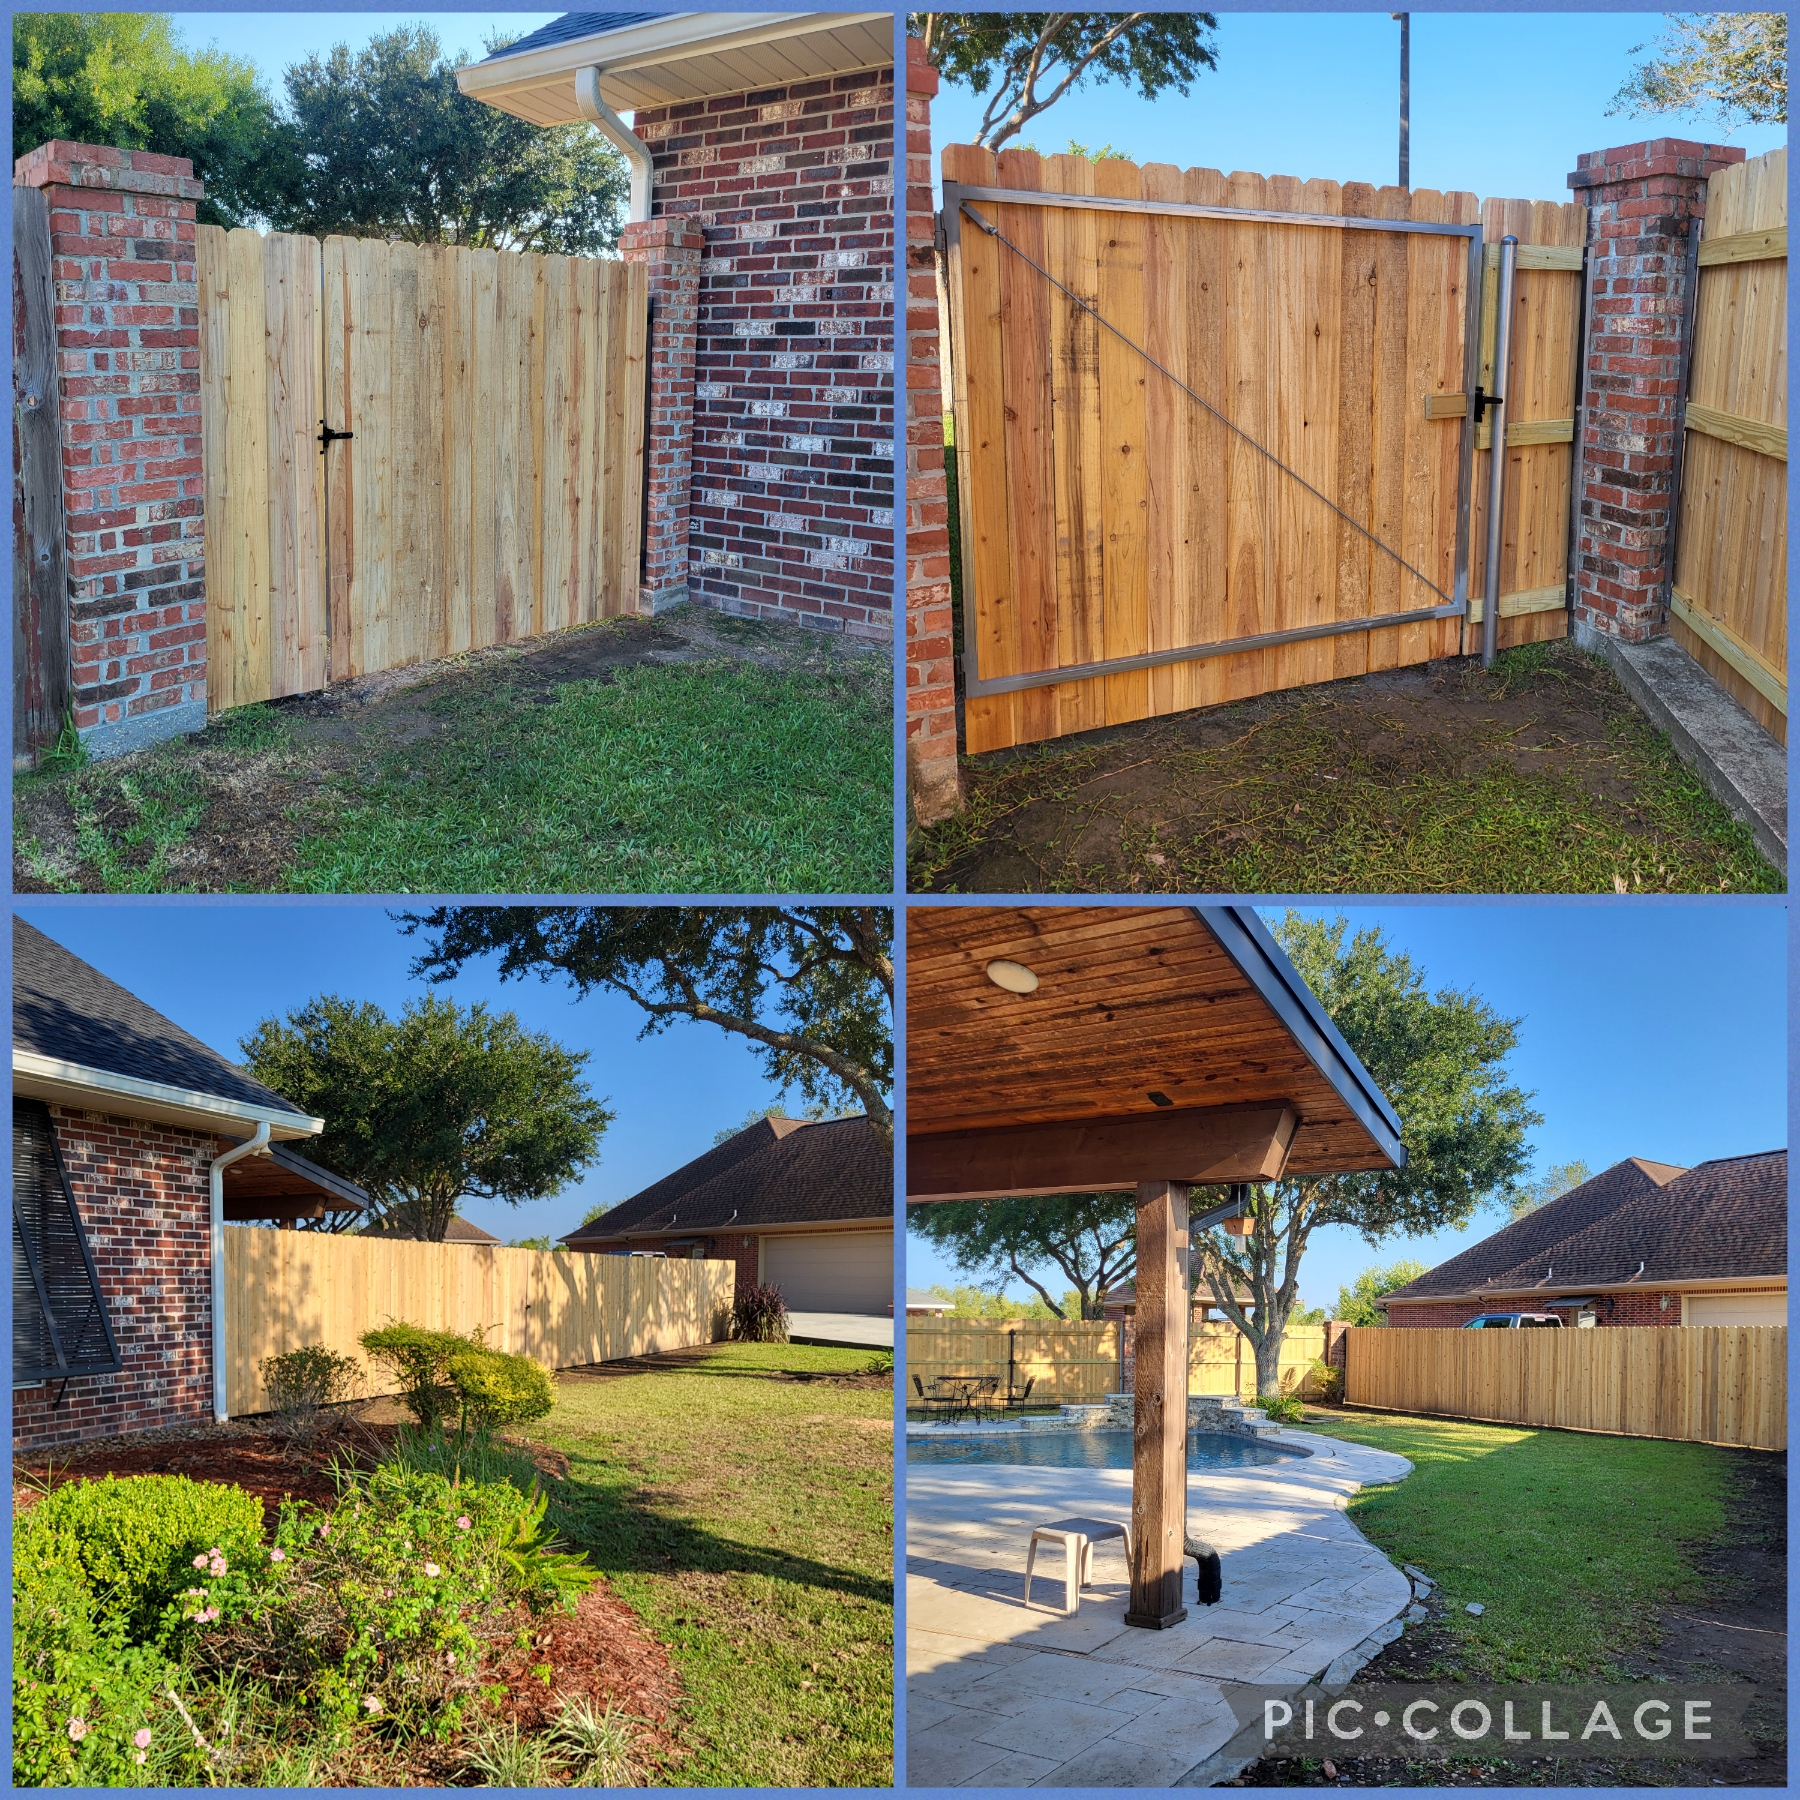 Top Quality 6Ft. Cedar Wood Fence Installation plus Gates in Berwick, LA Thumbnail